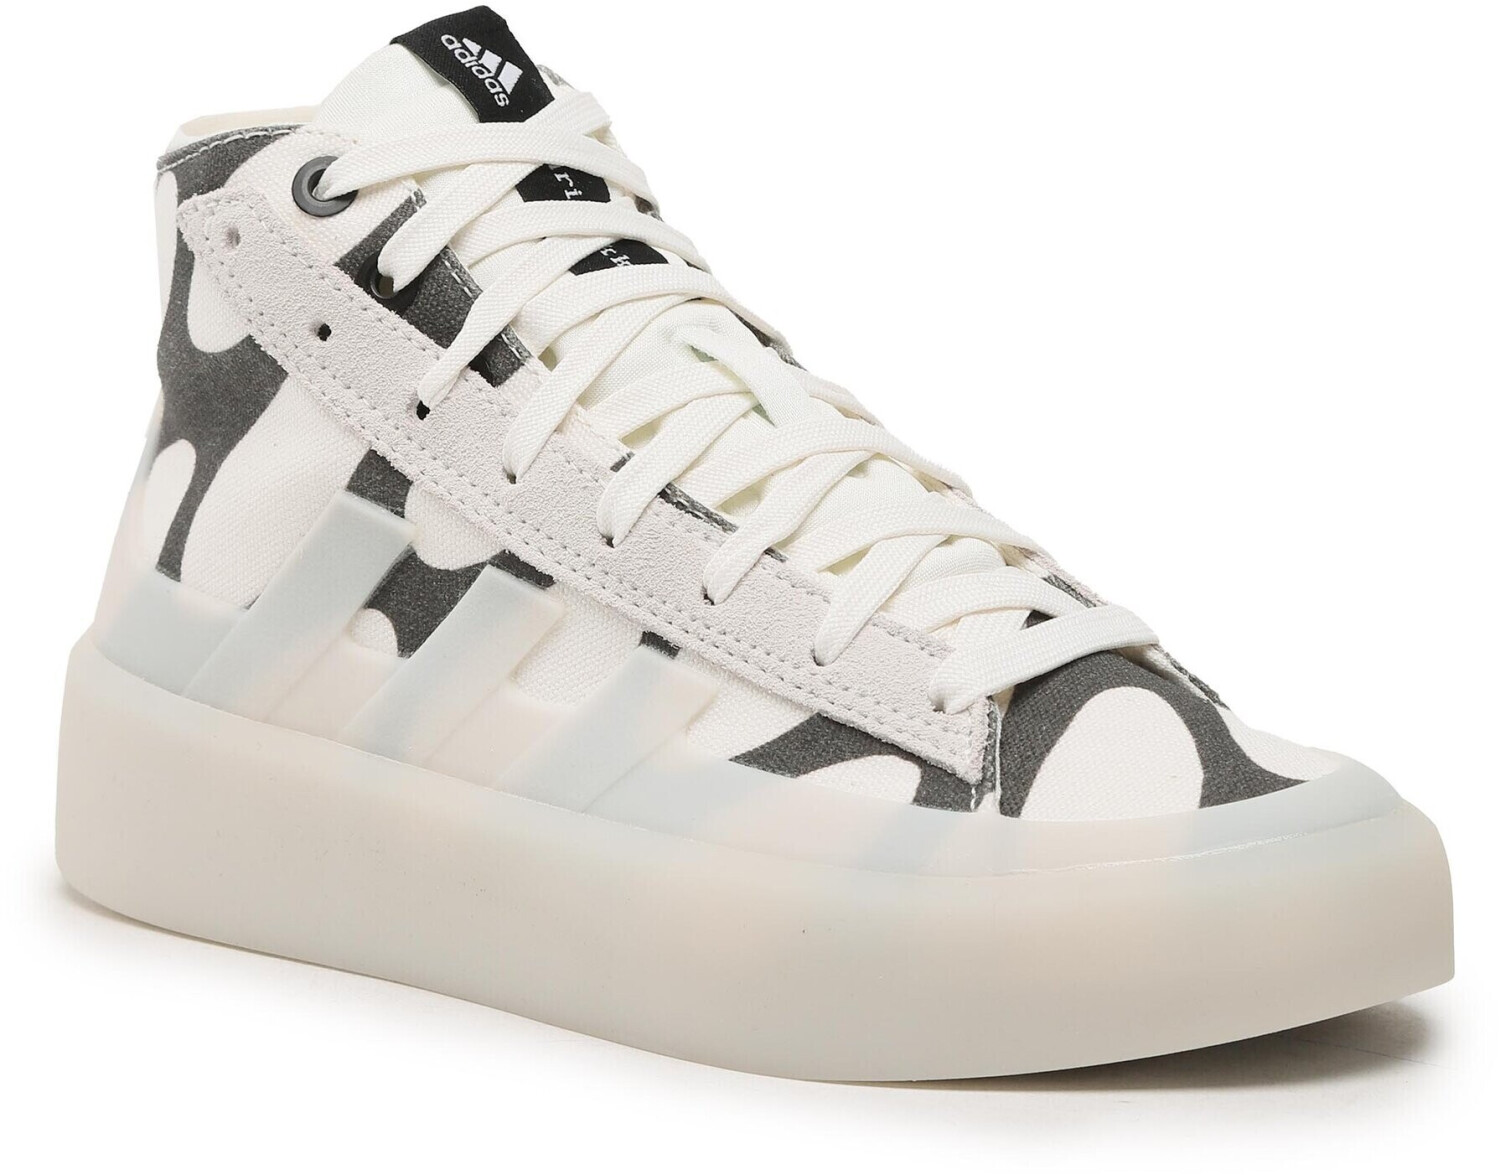 Adidas x Marimekko Znsored Hi core black/cloud white/cloud white 